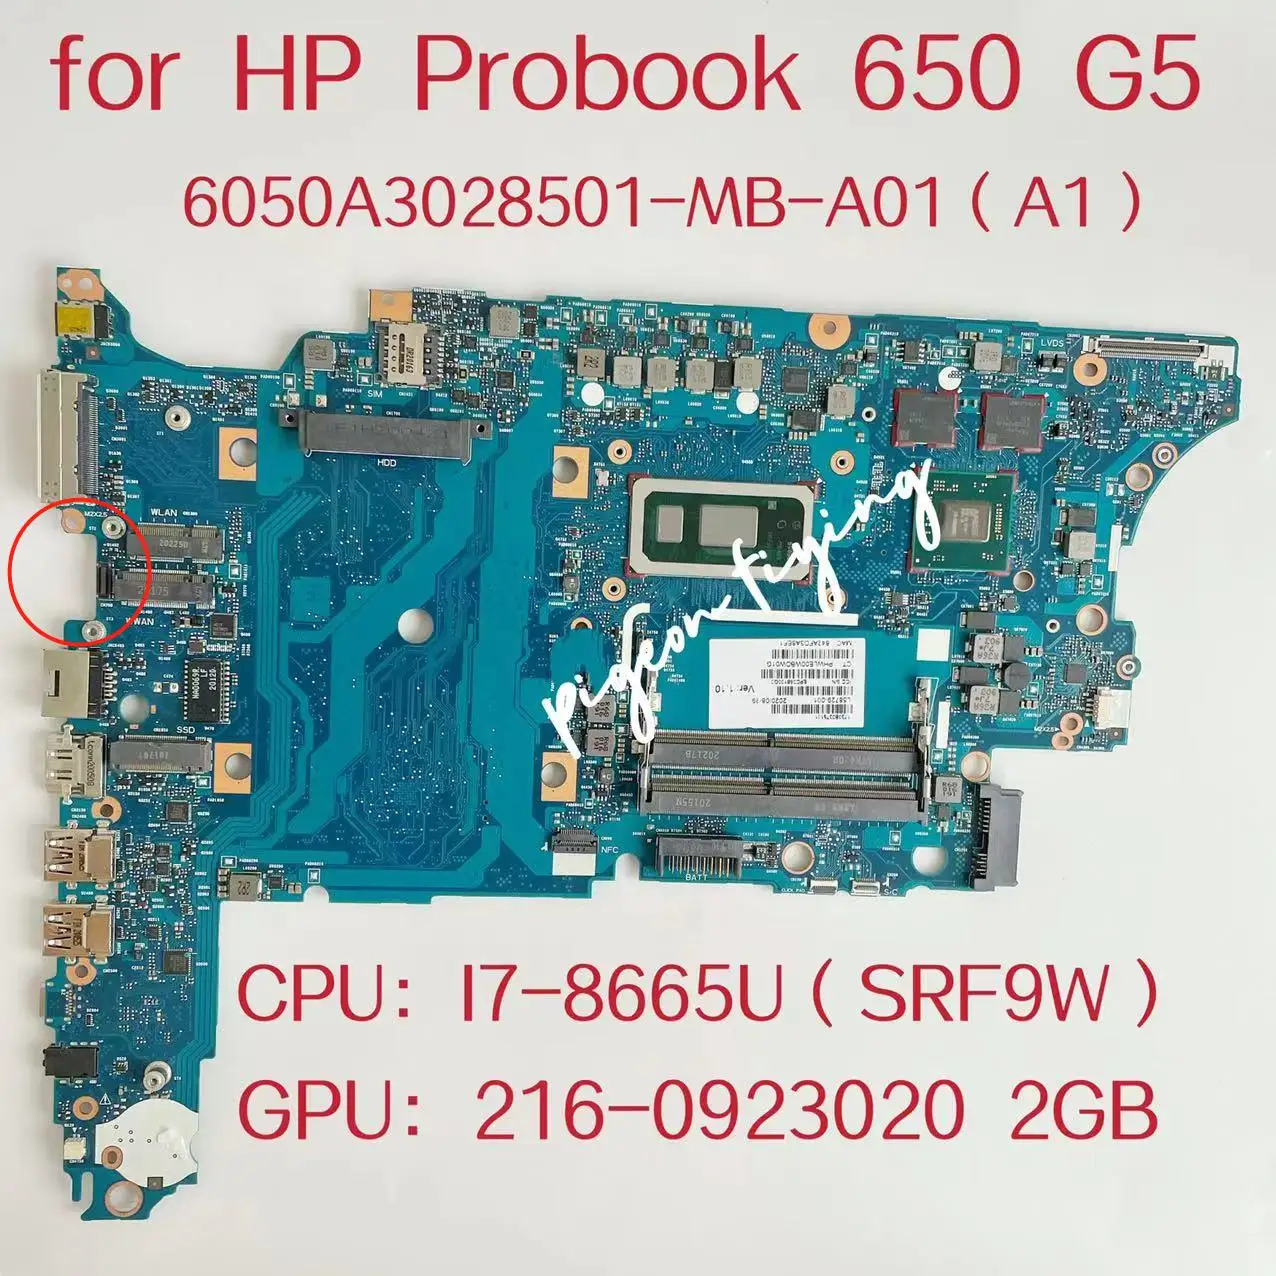 

6050A3028501-MB-A01 Mainboard For HP Probook 650 G5 Laptop Motherboard CPU:I7-8665U SRF9W GPU:216-0923020 2GB AMD L58729-001